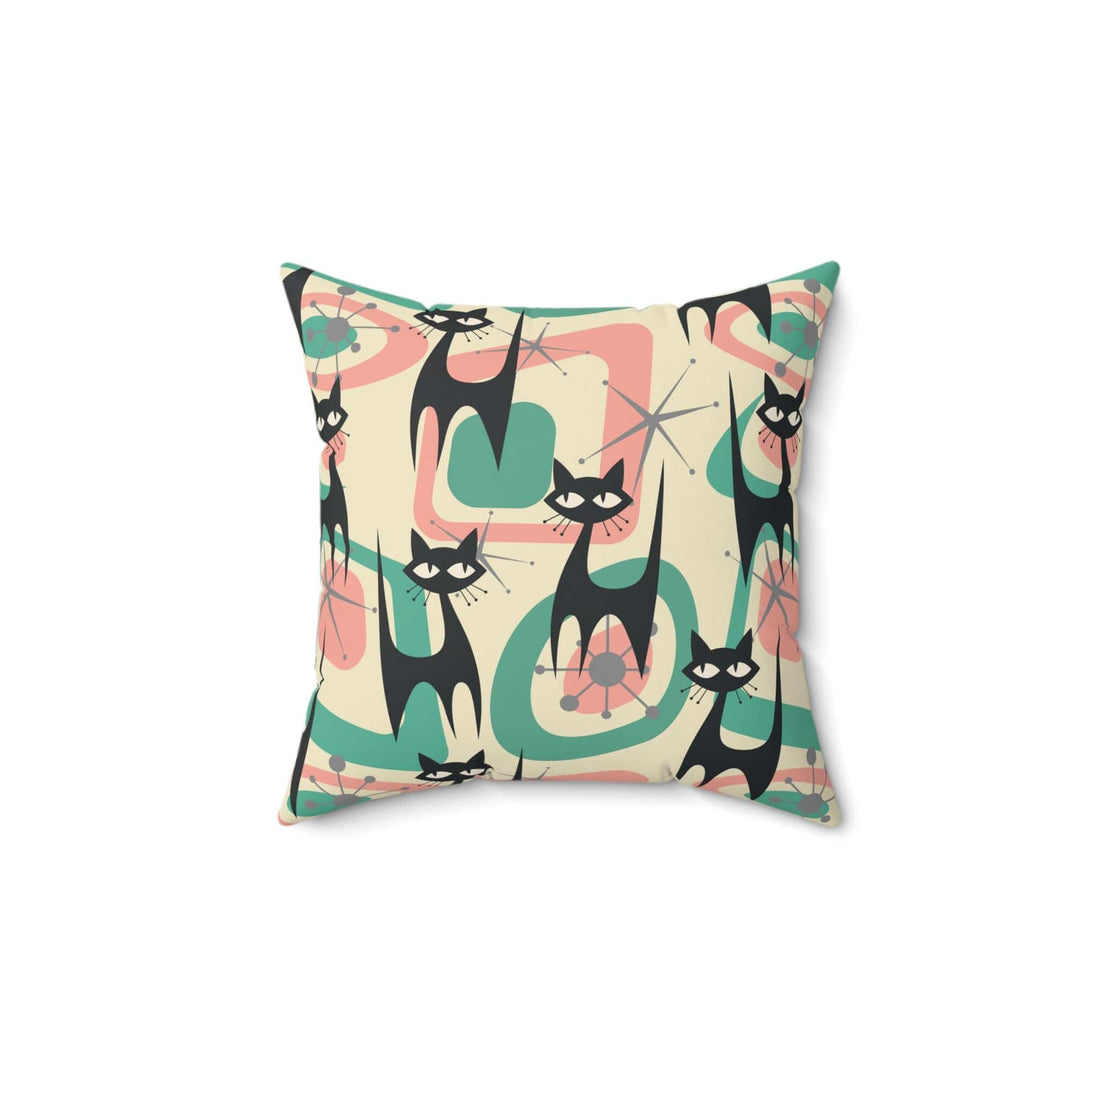 Kate McEnroe New York Atomic Cat Mid Century Modern Starburst Throw Pillow with Insert, 60s Retro Geometric Pink, Mint, Gray Living Room, Bedroom DecorThrow Pillows29529080037115796861